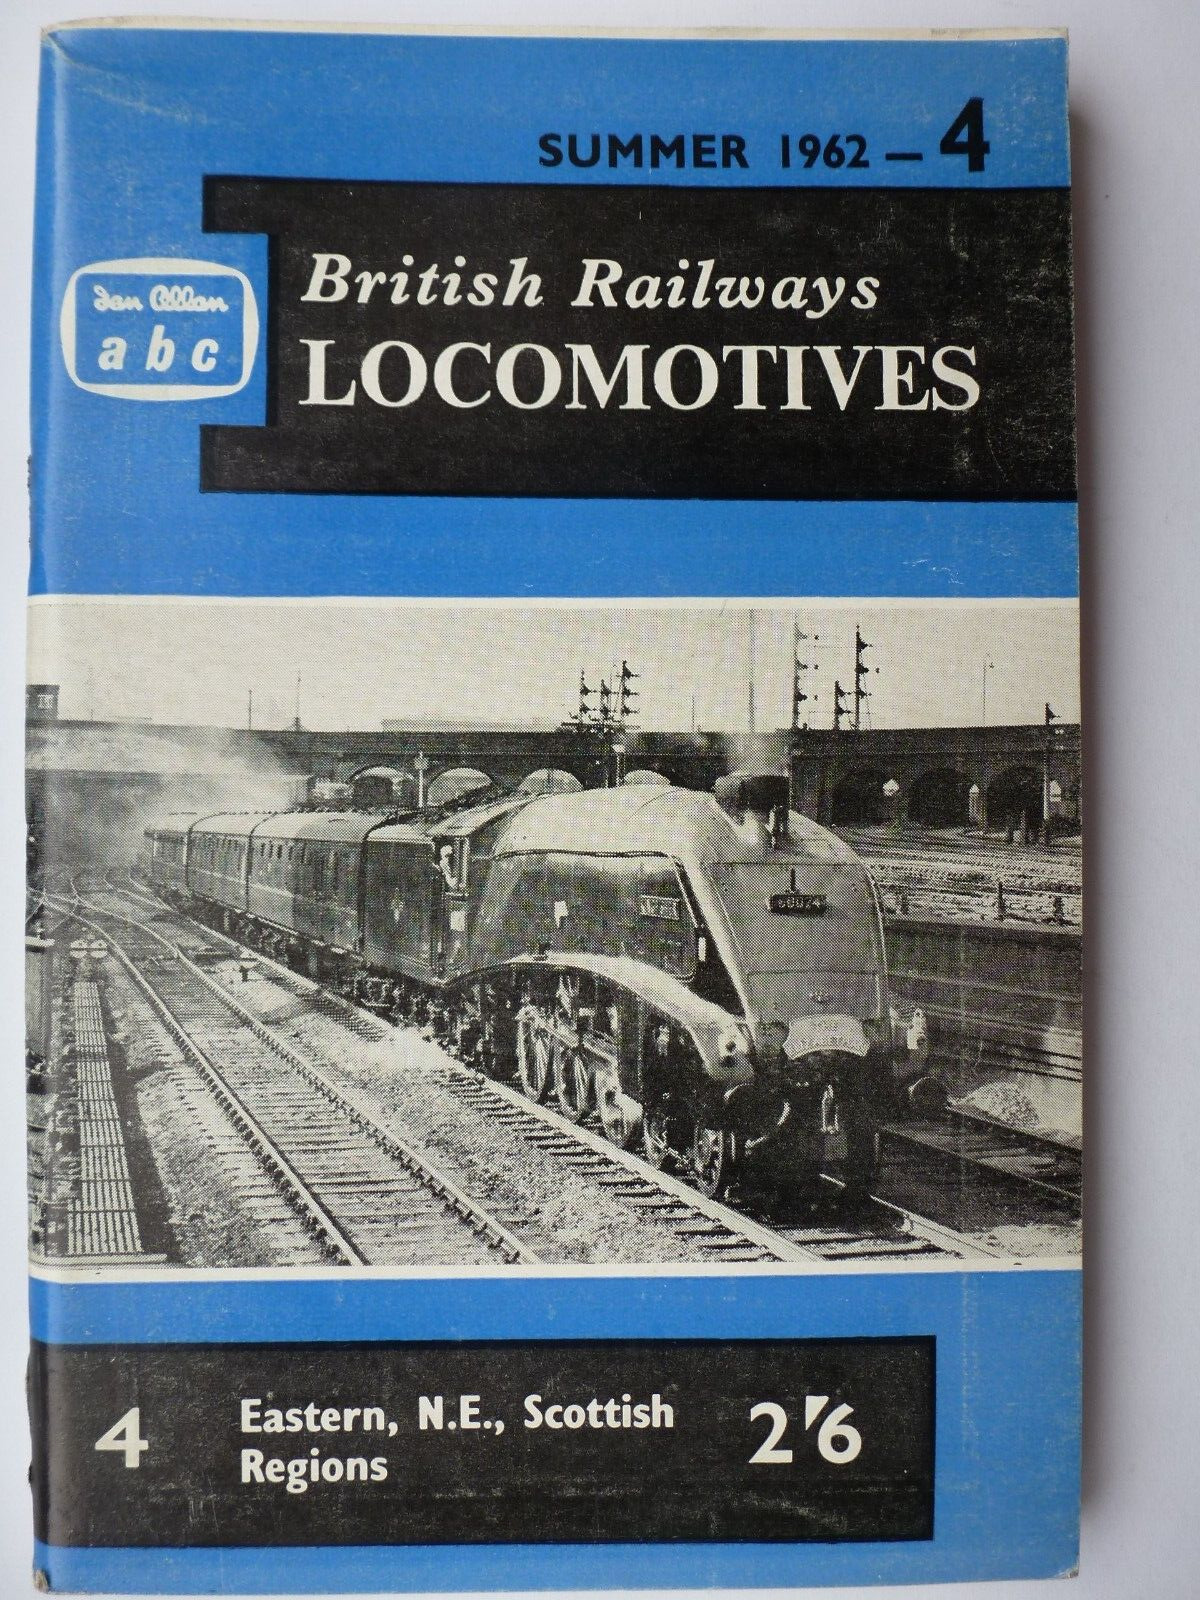 Ian Allan abc British Railways Locomotives Eastern, N.E., Scottish Region 1962